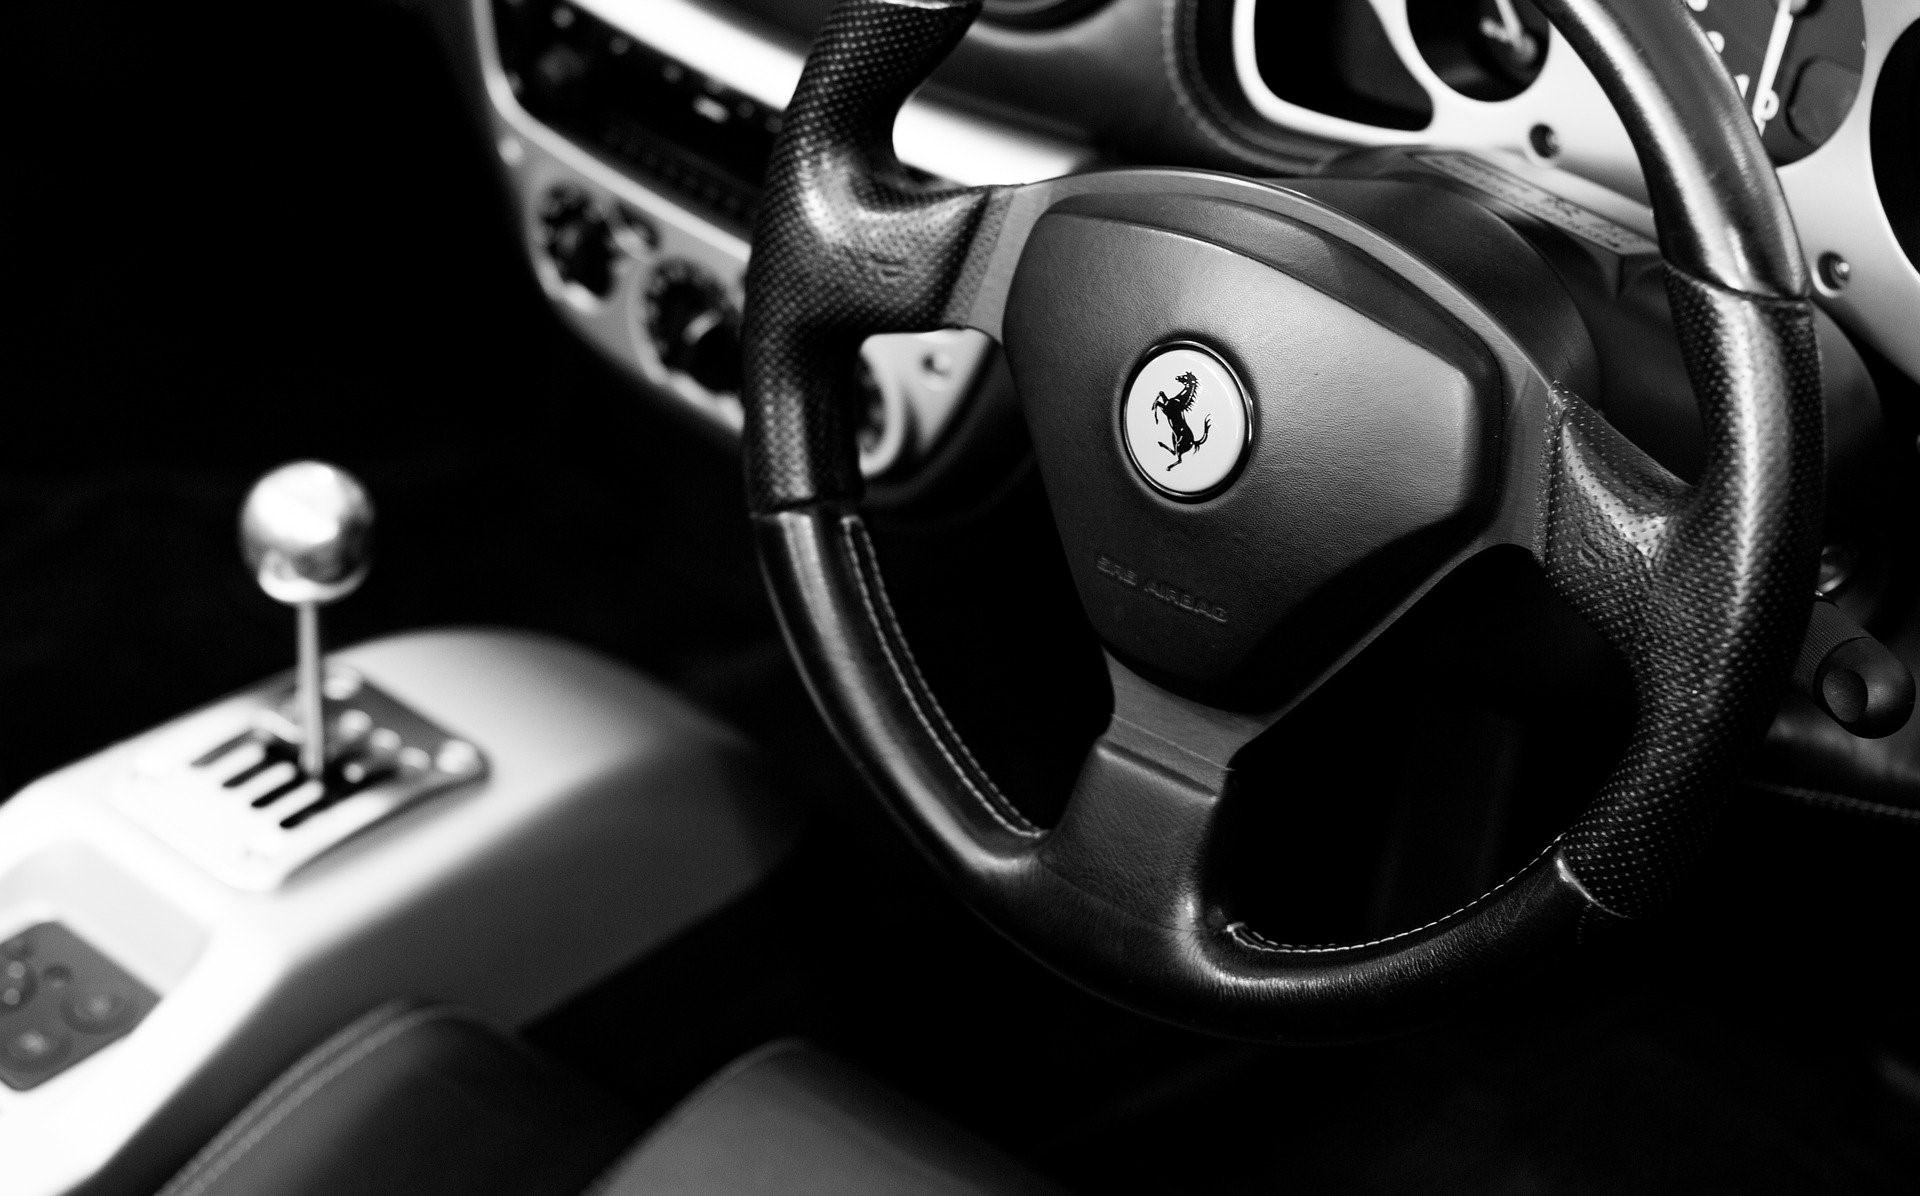 Ferrari Black